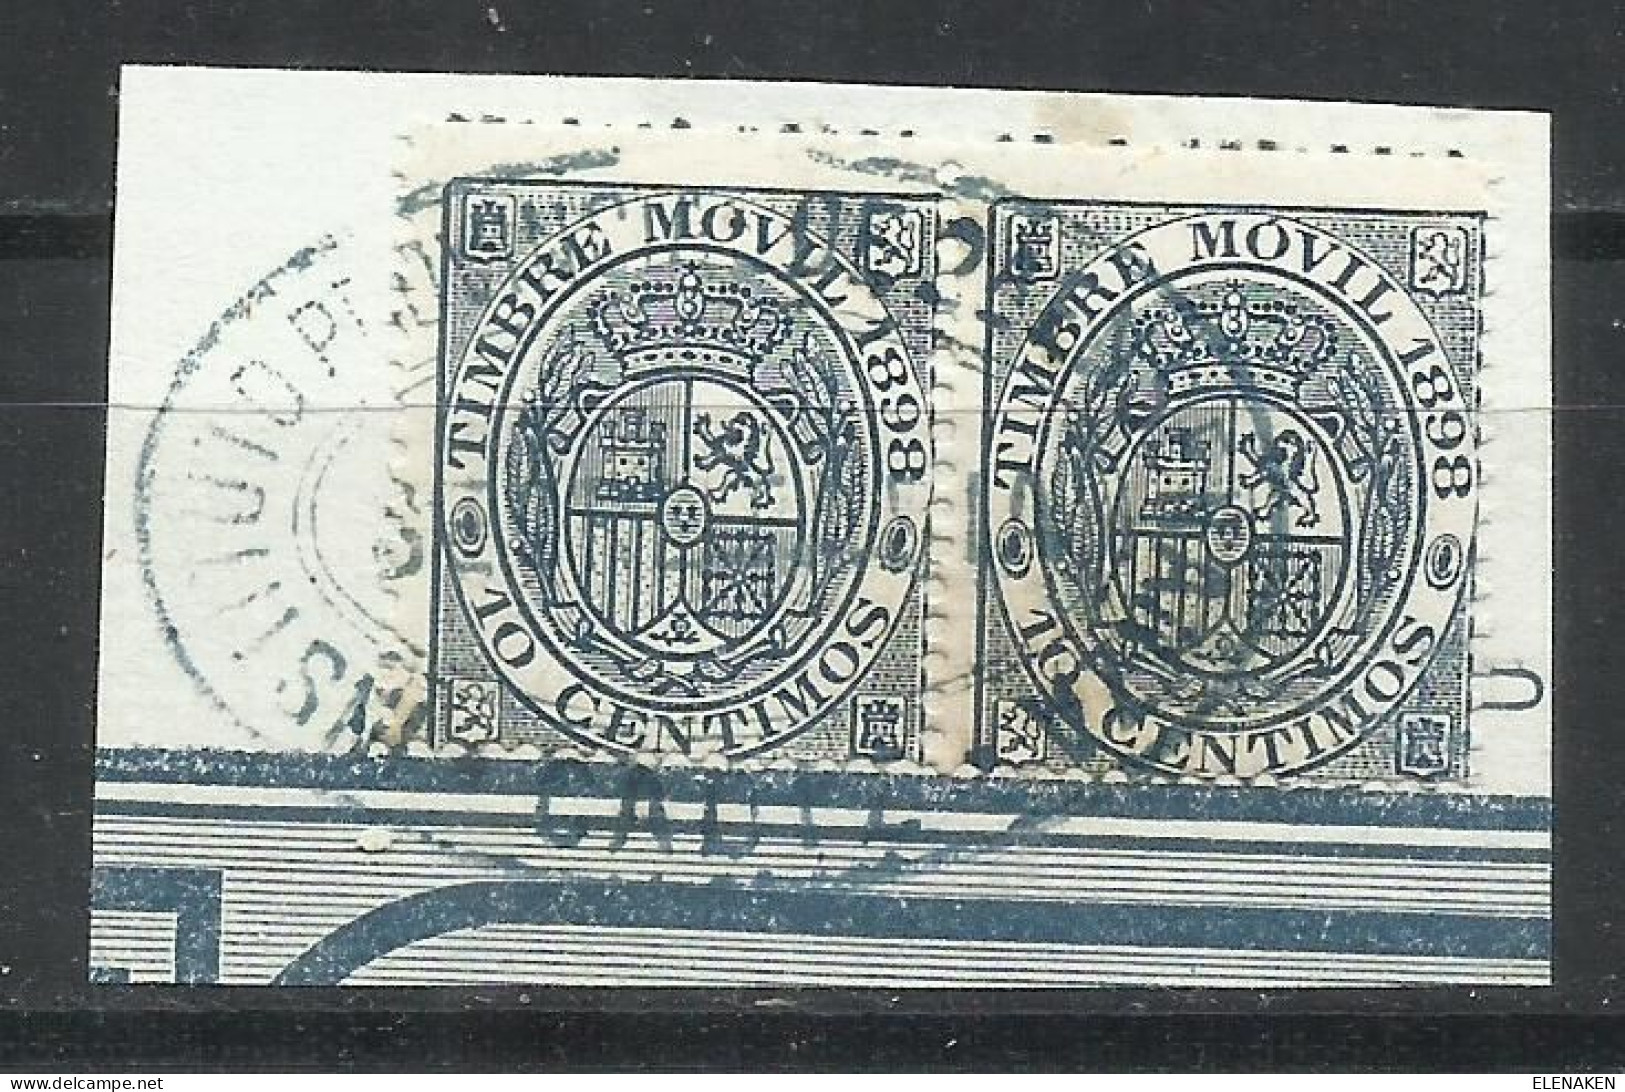 8527A-SELLO FISCAL PAREJA 1889 TIMBRE MOVIL CADIZ INSTITUTO PROVINCIAL CADIZ. EDIFIL ALEMANY SPAIN REVENUE FISCAUX - Kriegssteuermarken